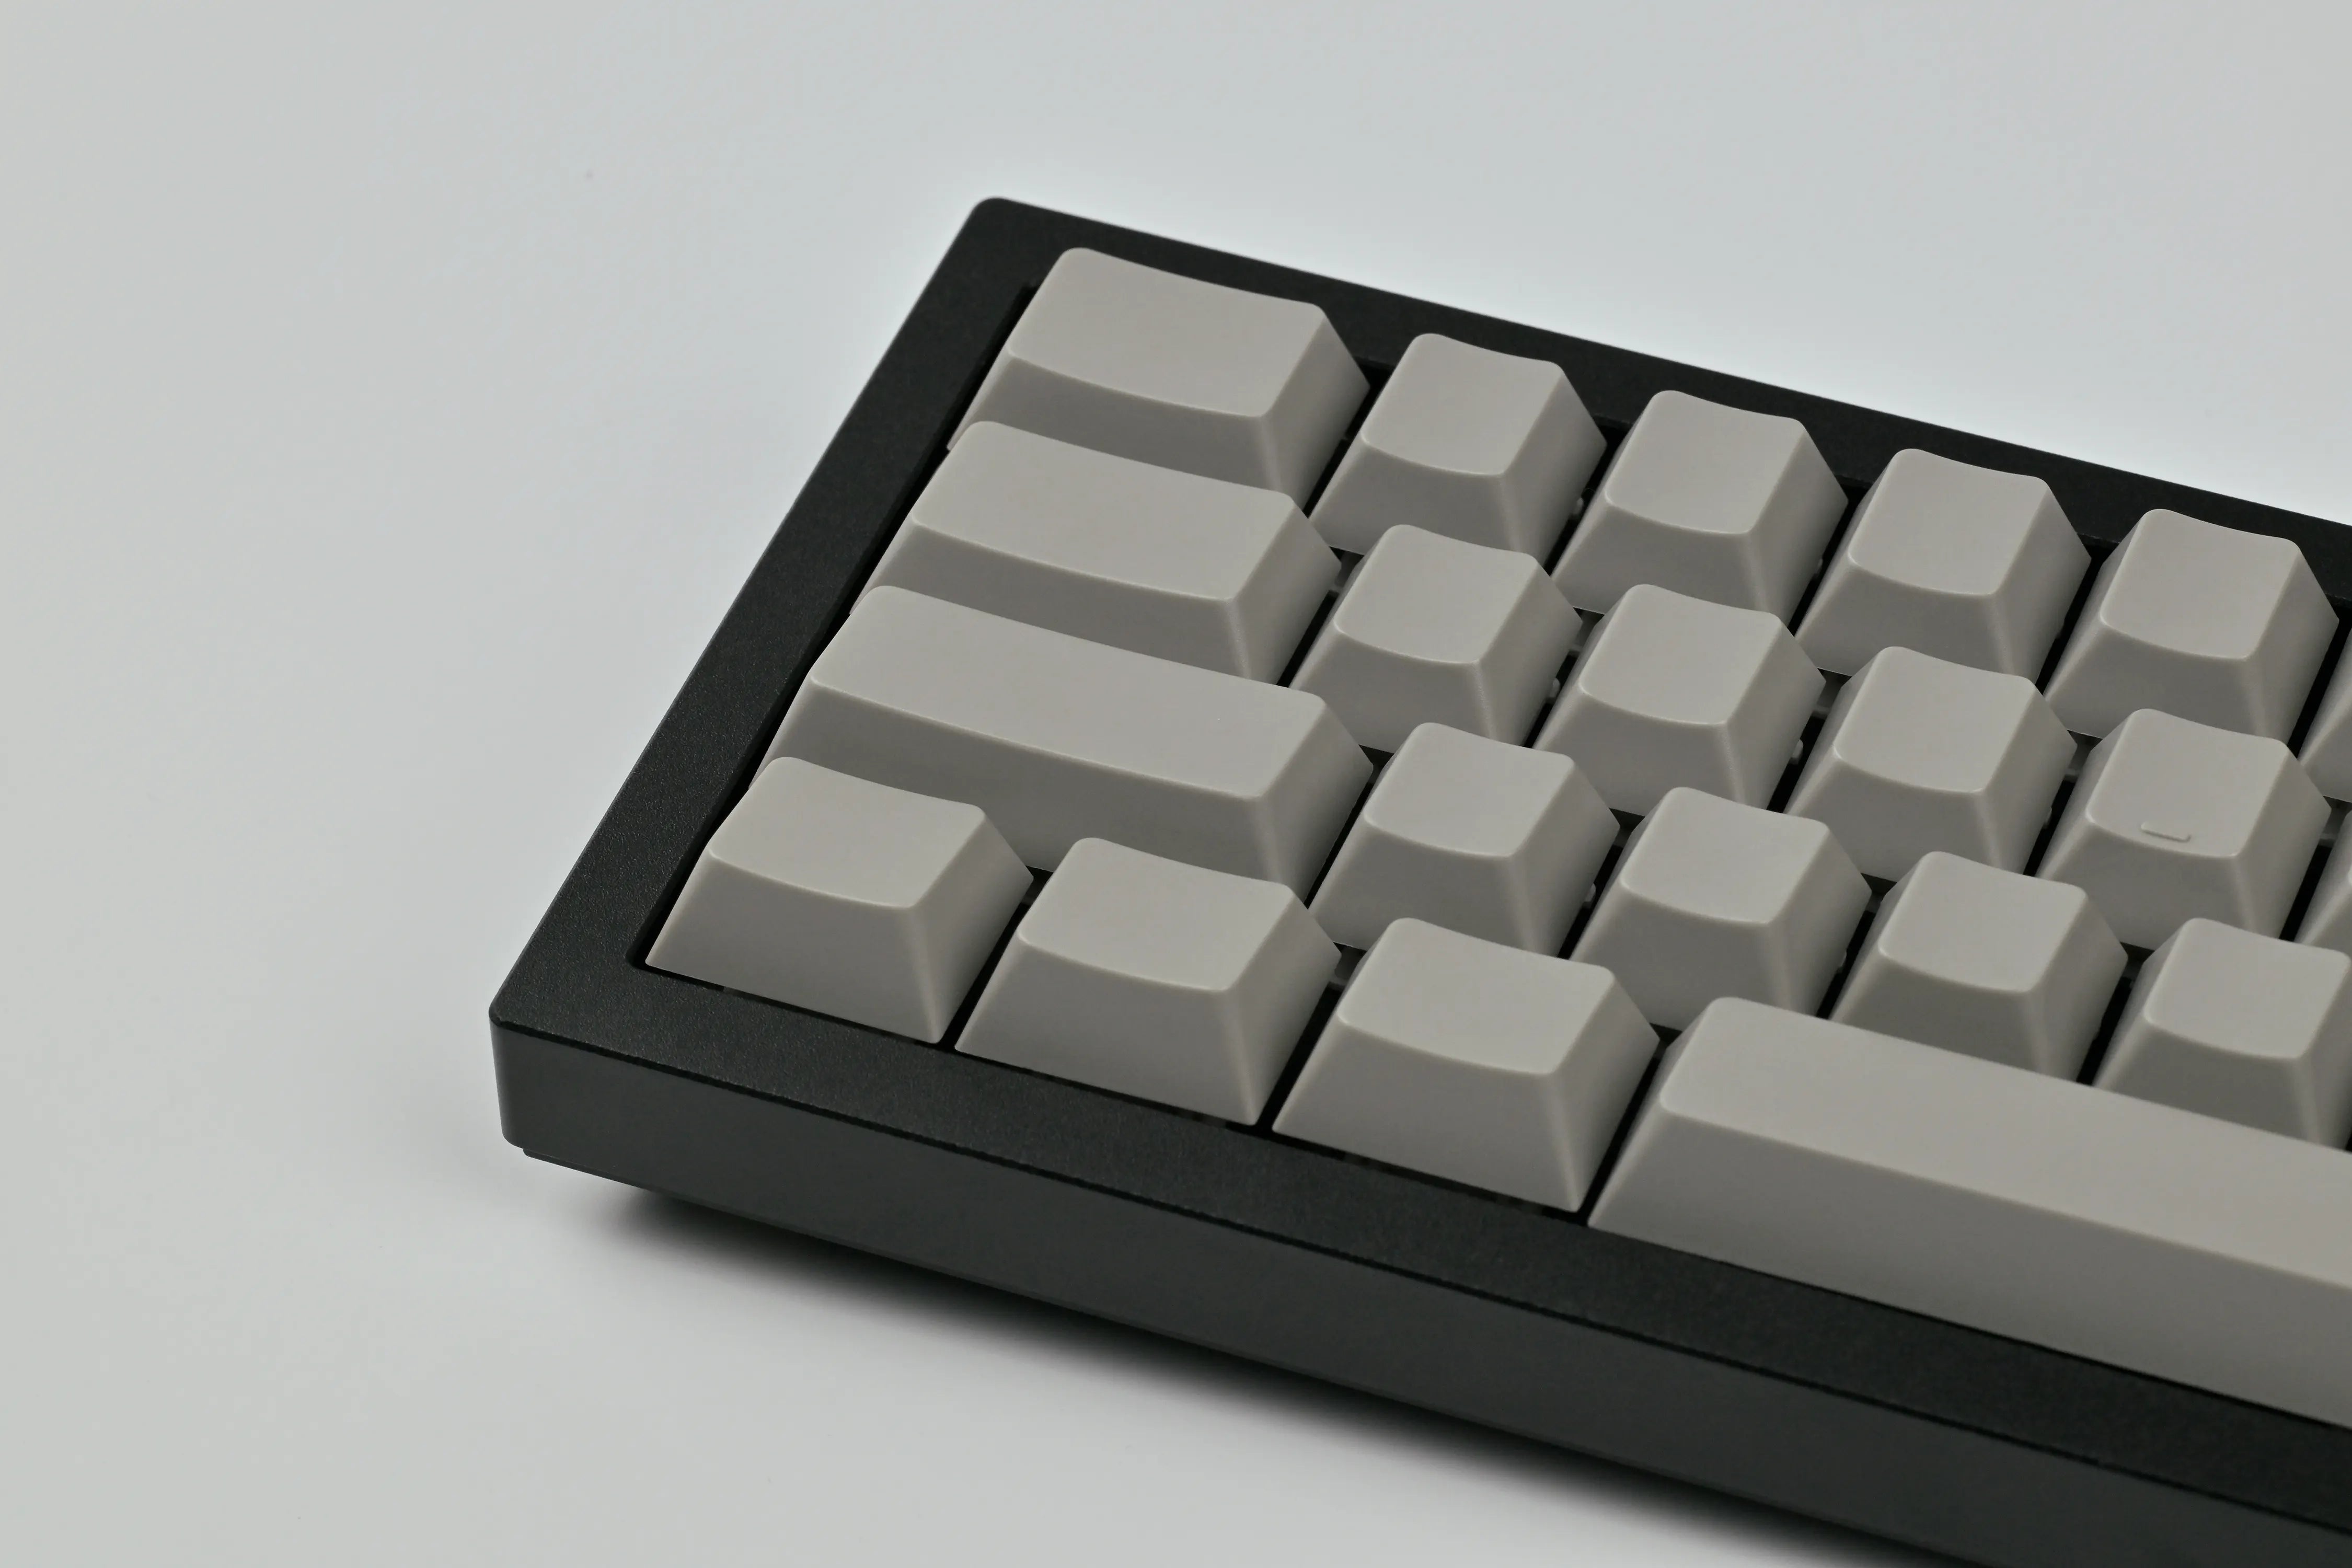 Keyreative ABS Cherry Profile Grey Blank Keycaps